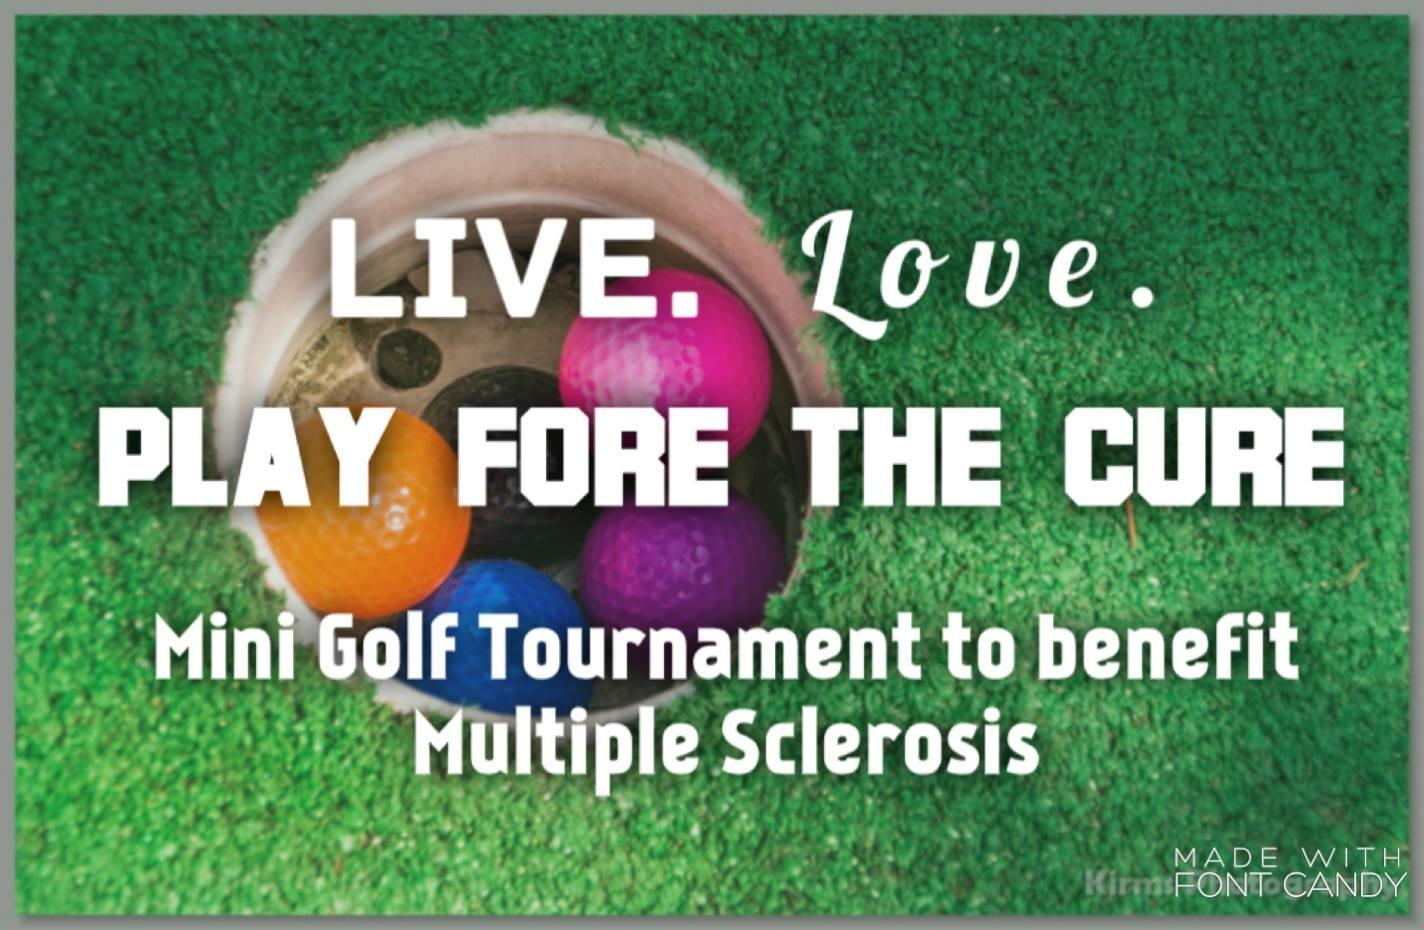 FORE the Cure Mini Golf Tourament